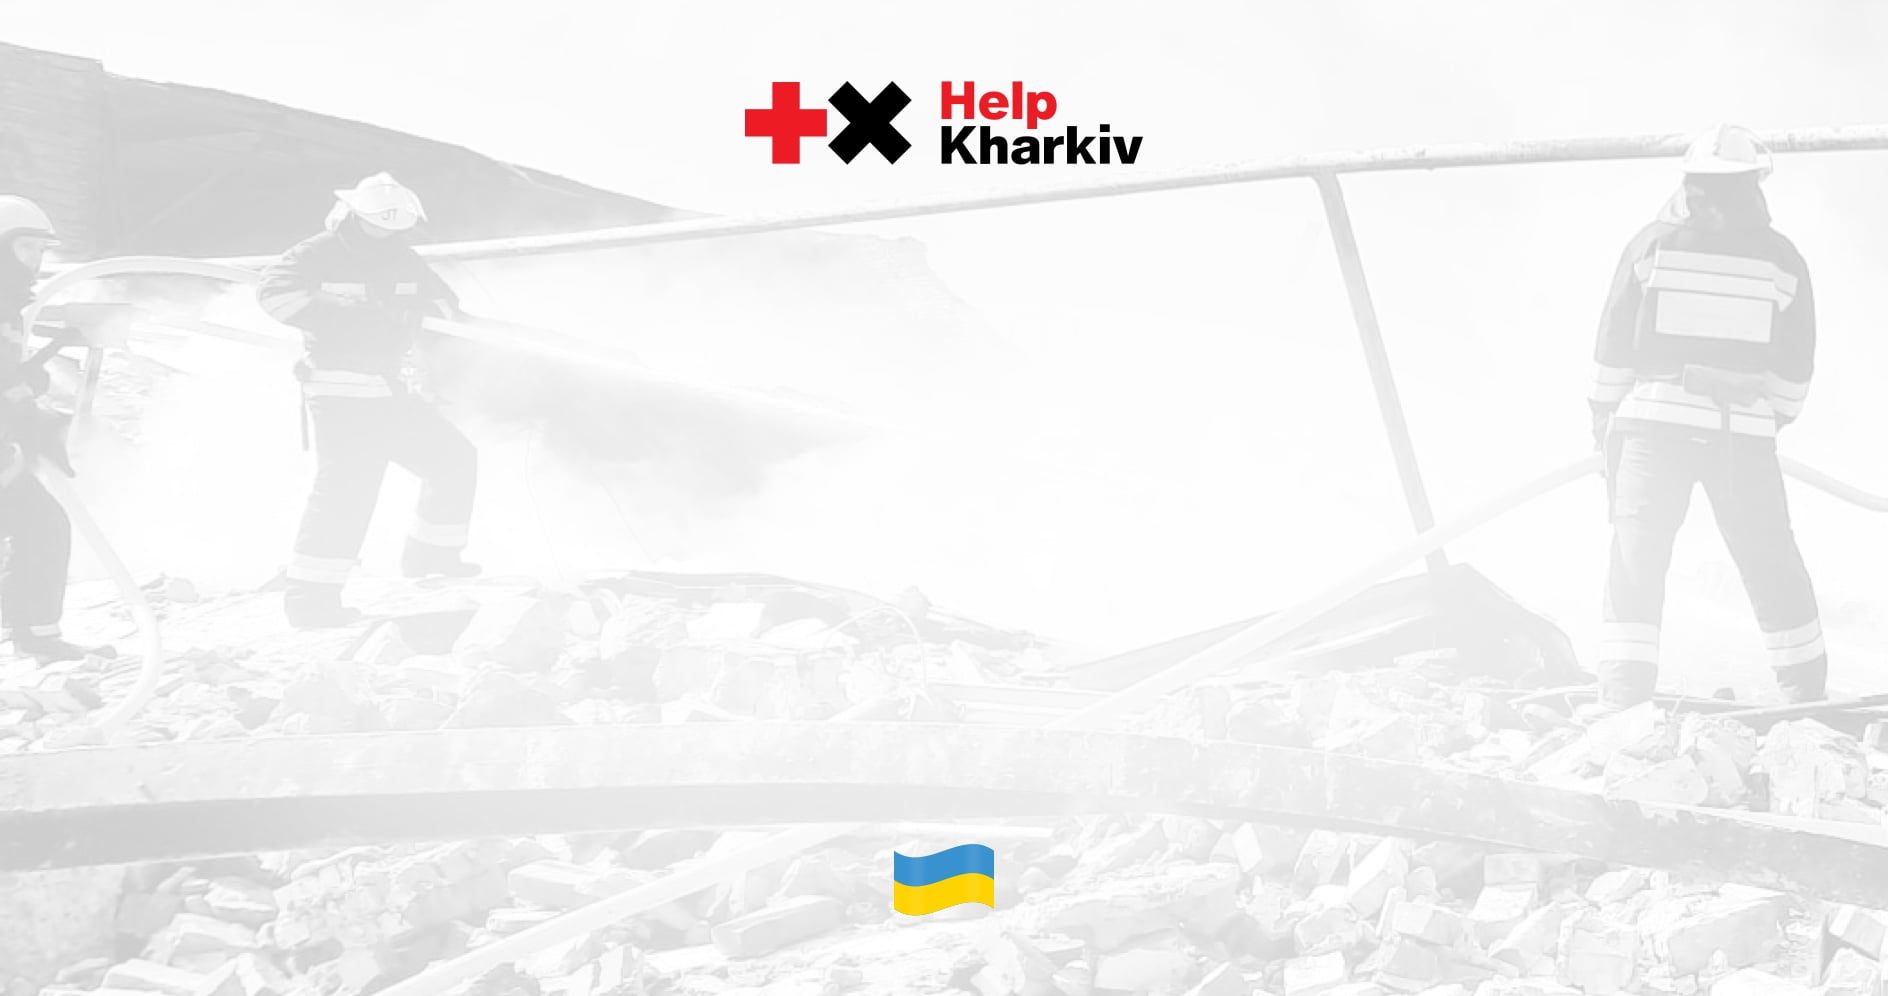 Charity Fund Help Kharkiv